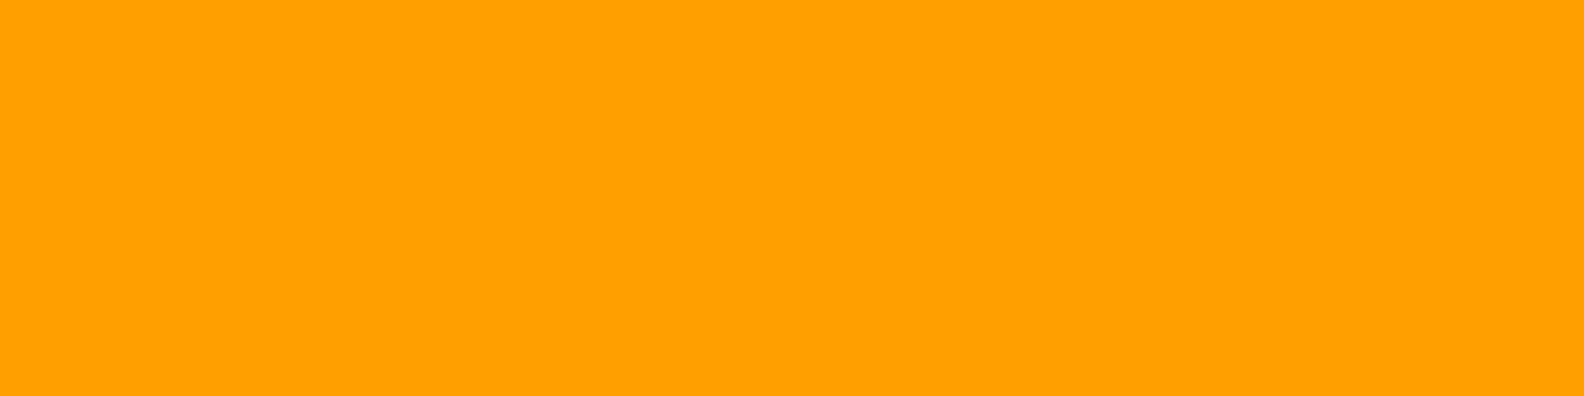 1584x396 Orange Peel Solid Color Background